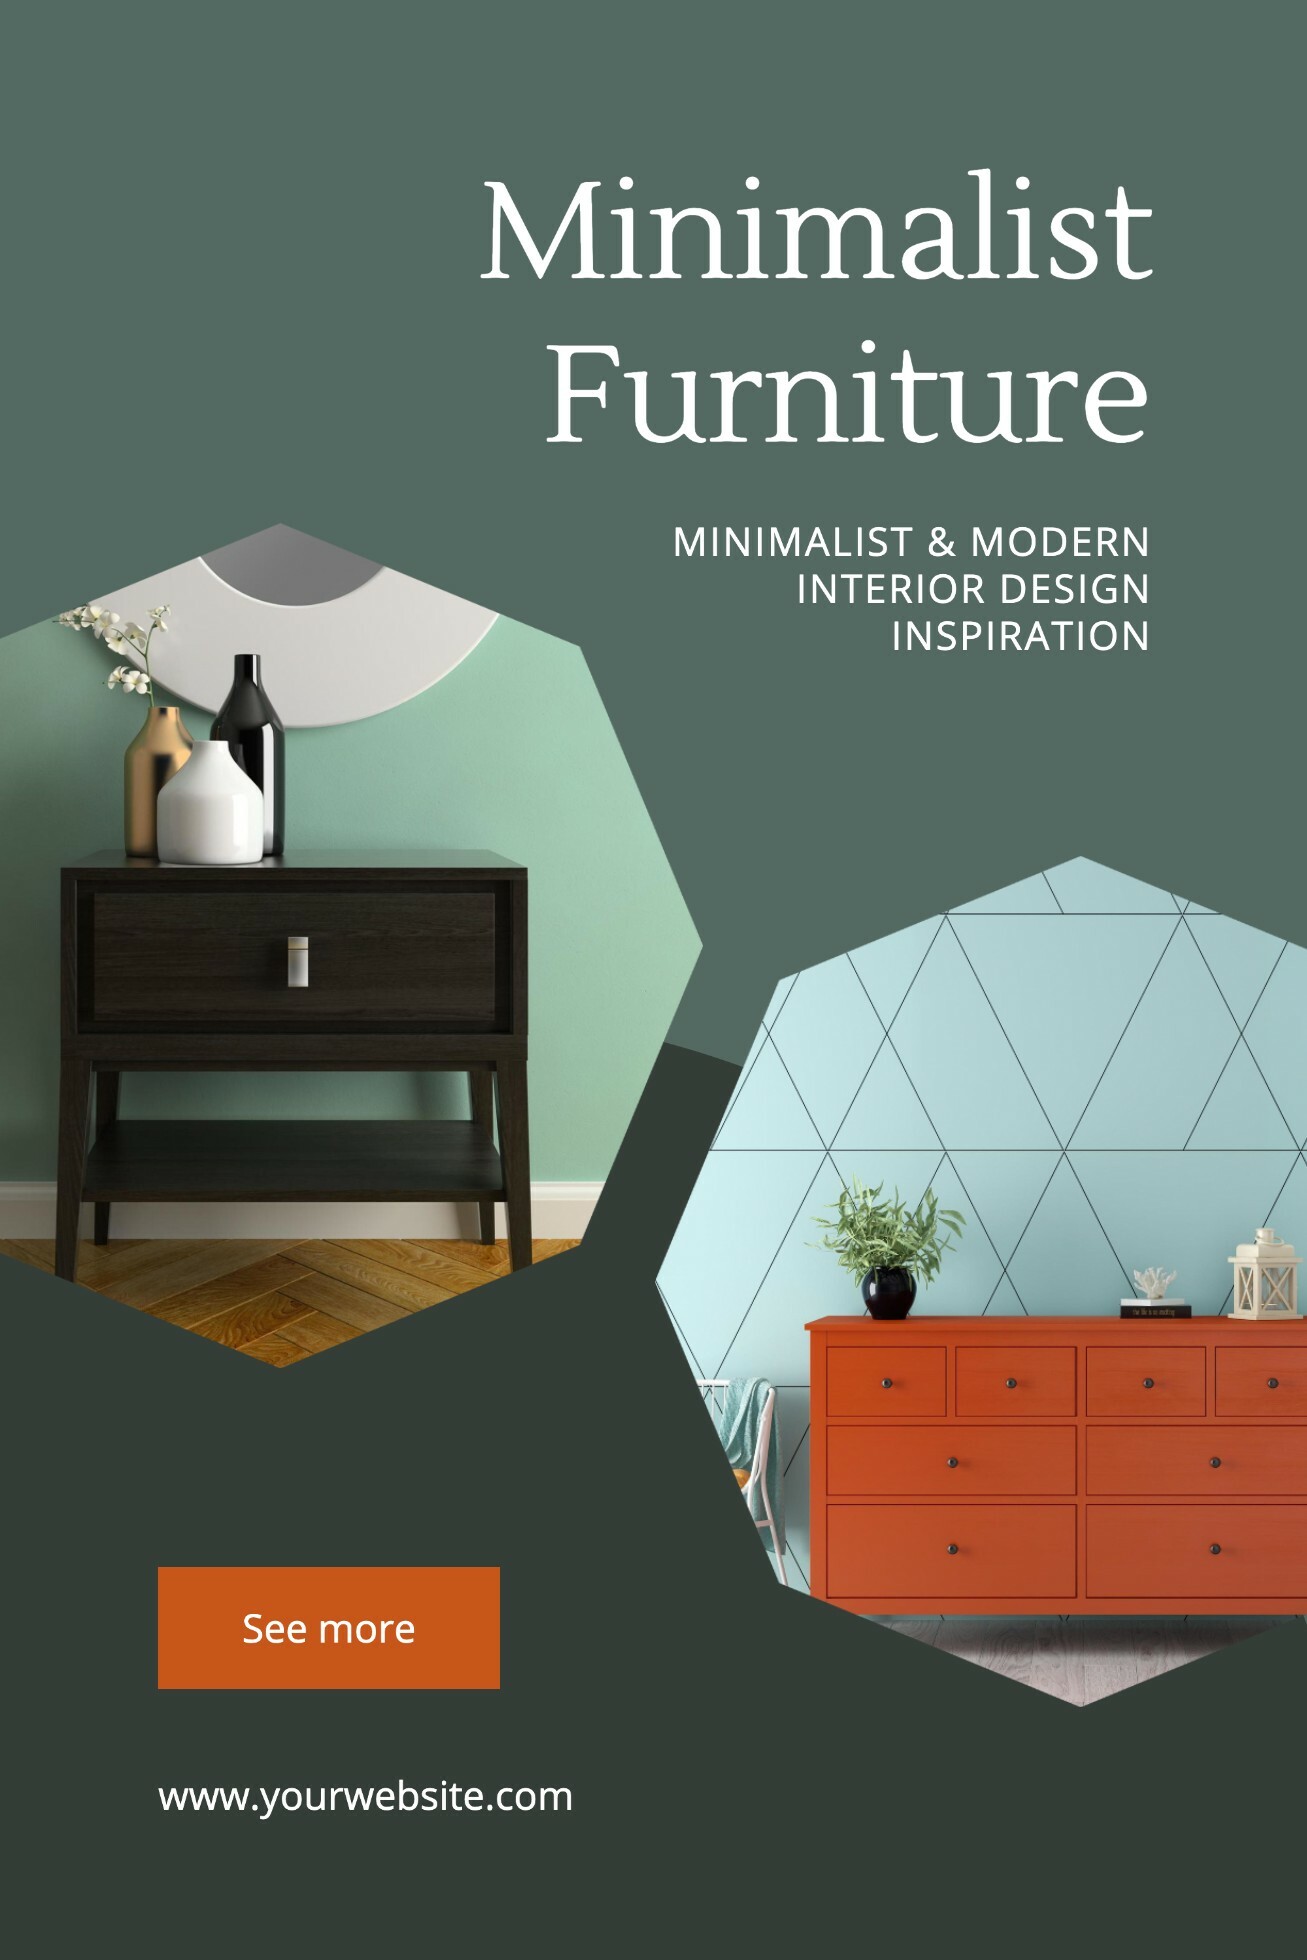 Green Minimalist Furniture Interior Pinterest template